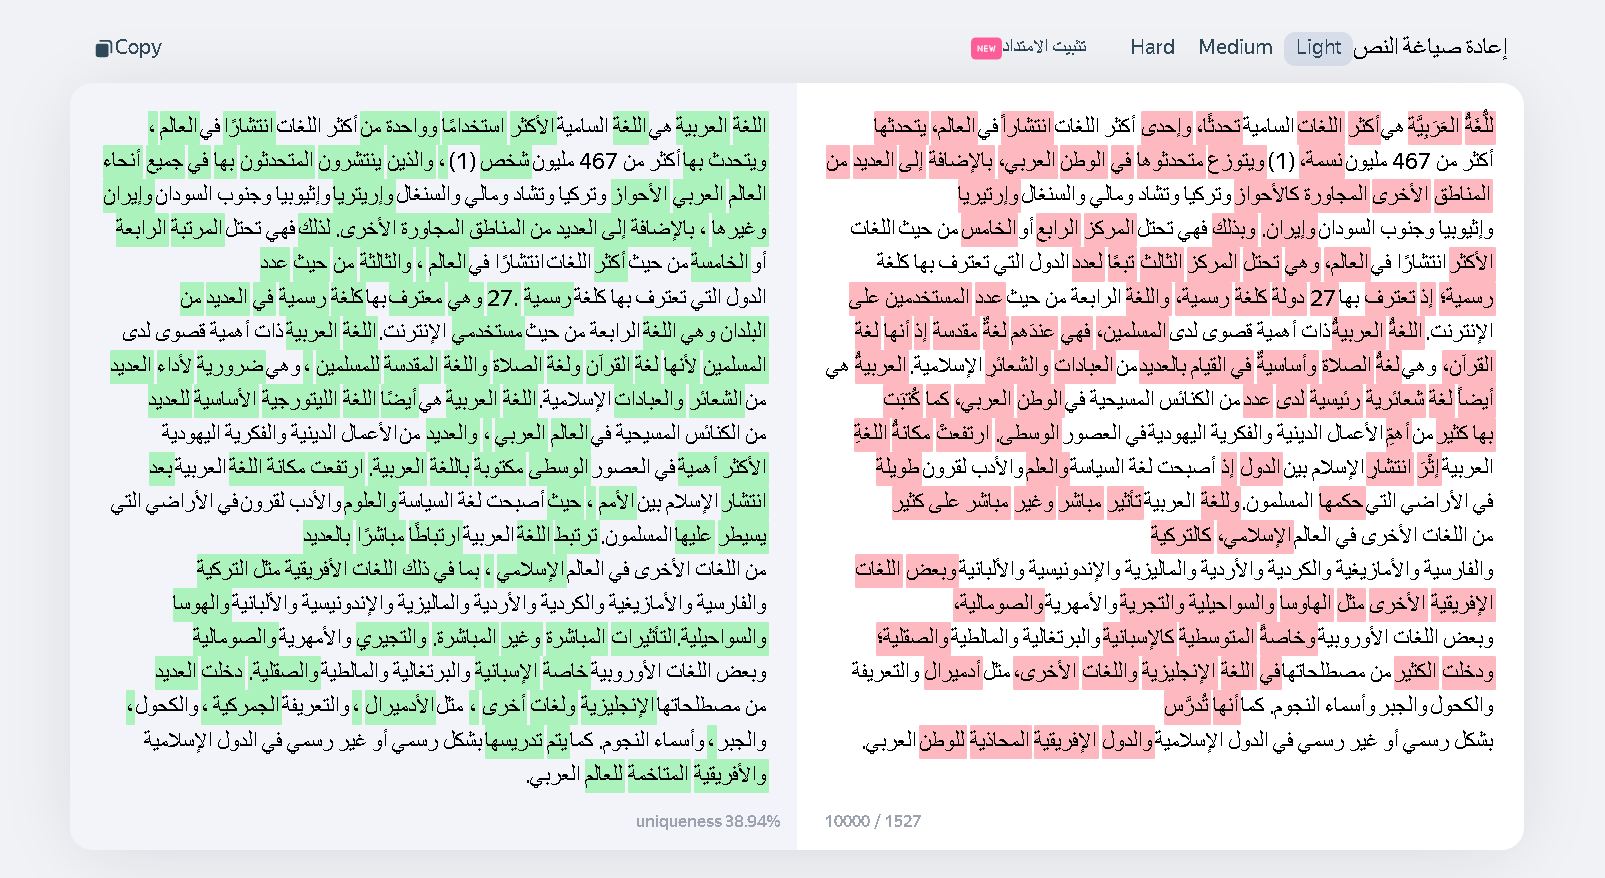 Neural Writer can paraphrase Arabic language texts